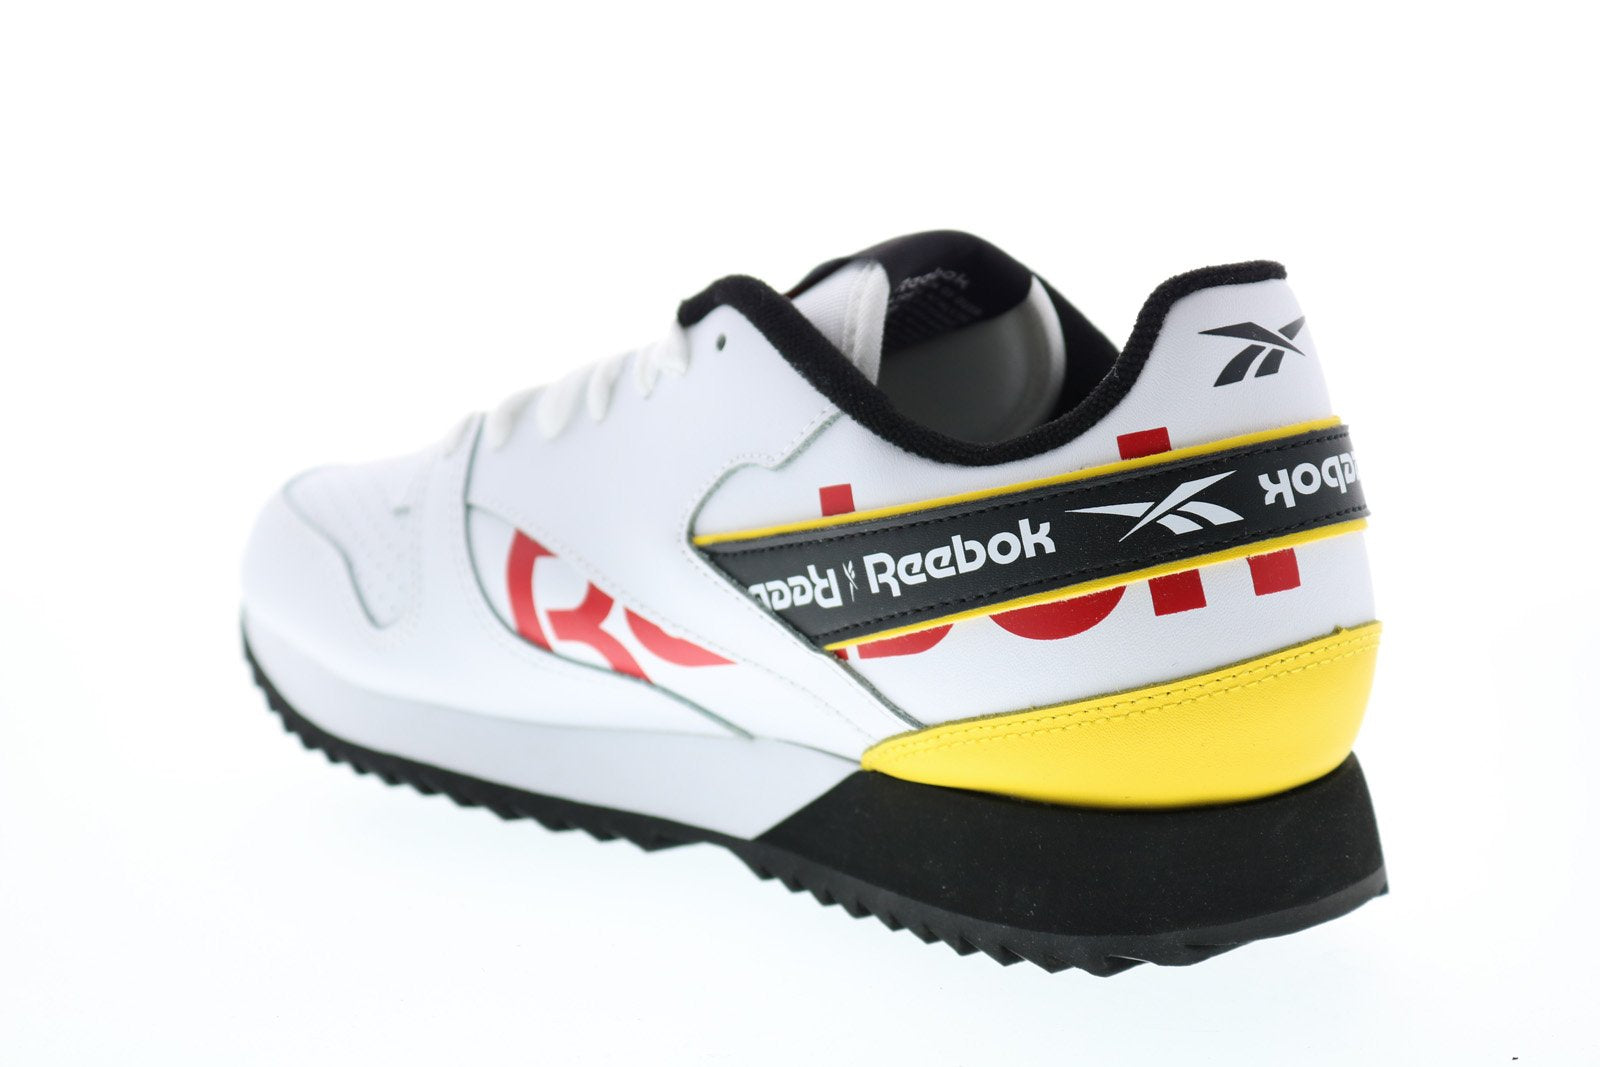 reebok shoes new model 219